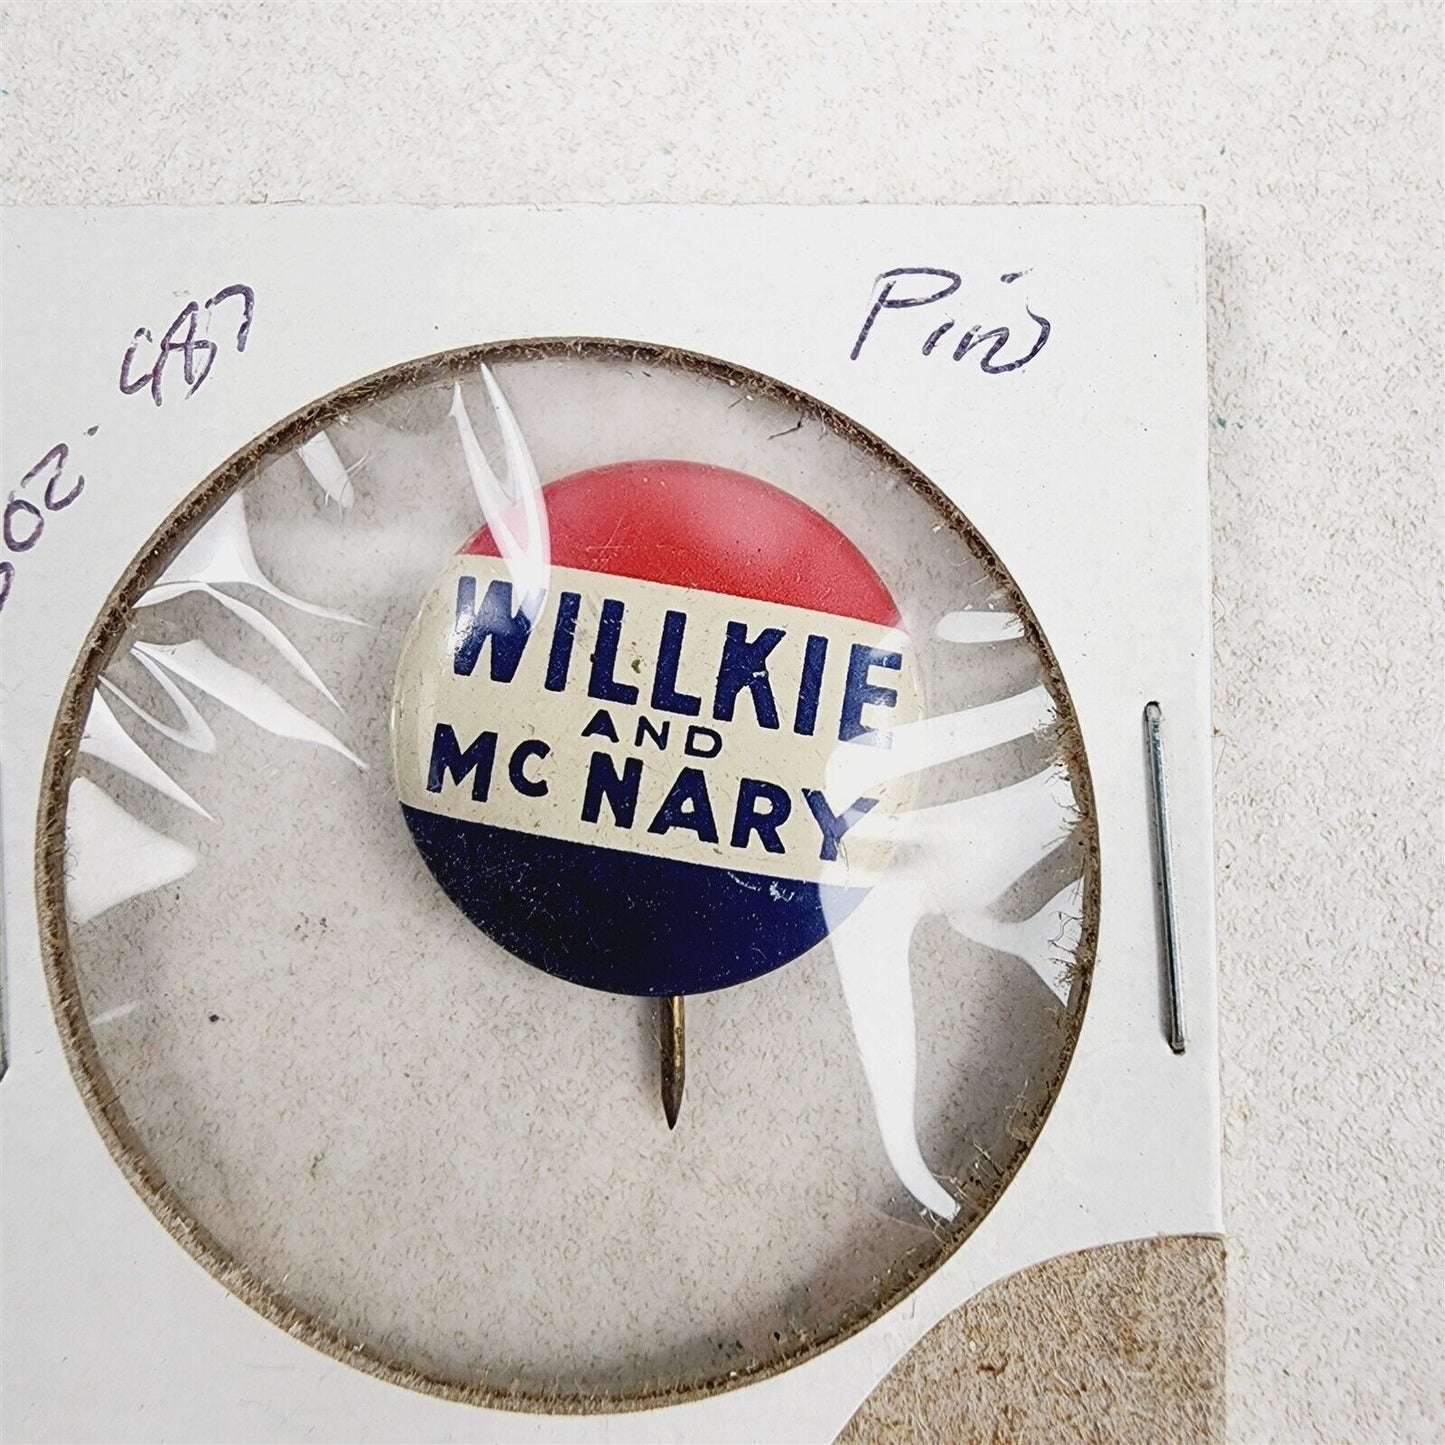 6 Vintage Political Pins Willkie McNary Muskie Humphrey LBJ Nixon Landon Knox